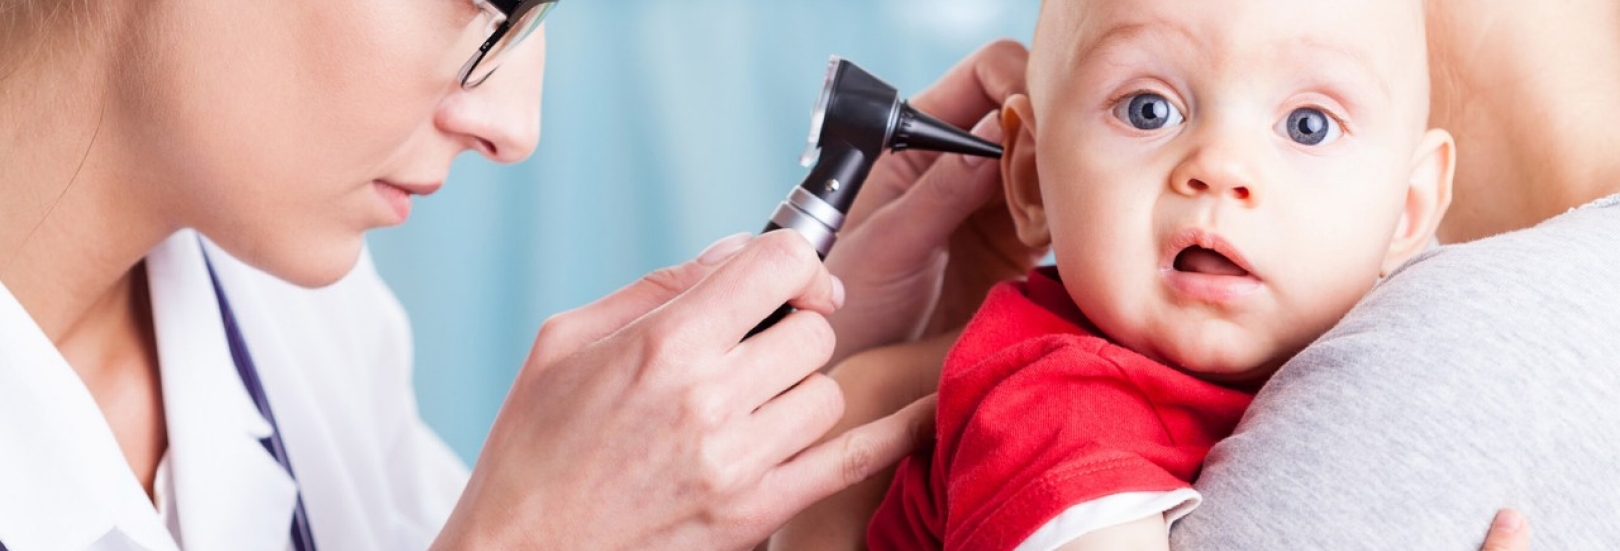 Doctor examining baby boy with otoscope